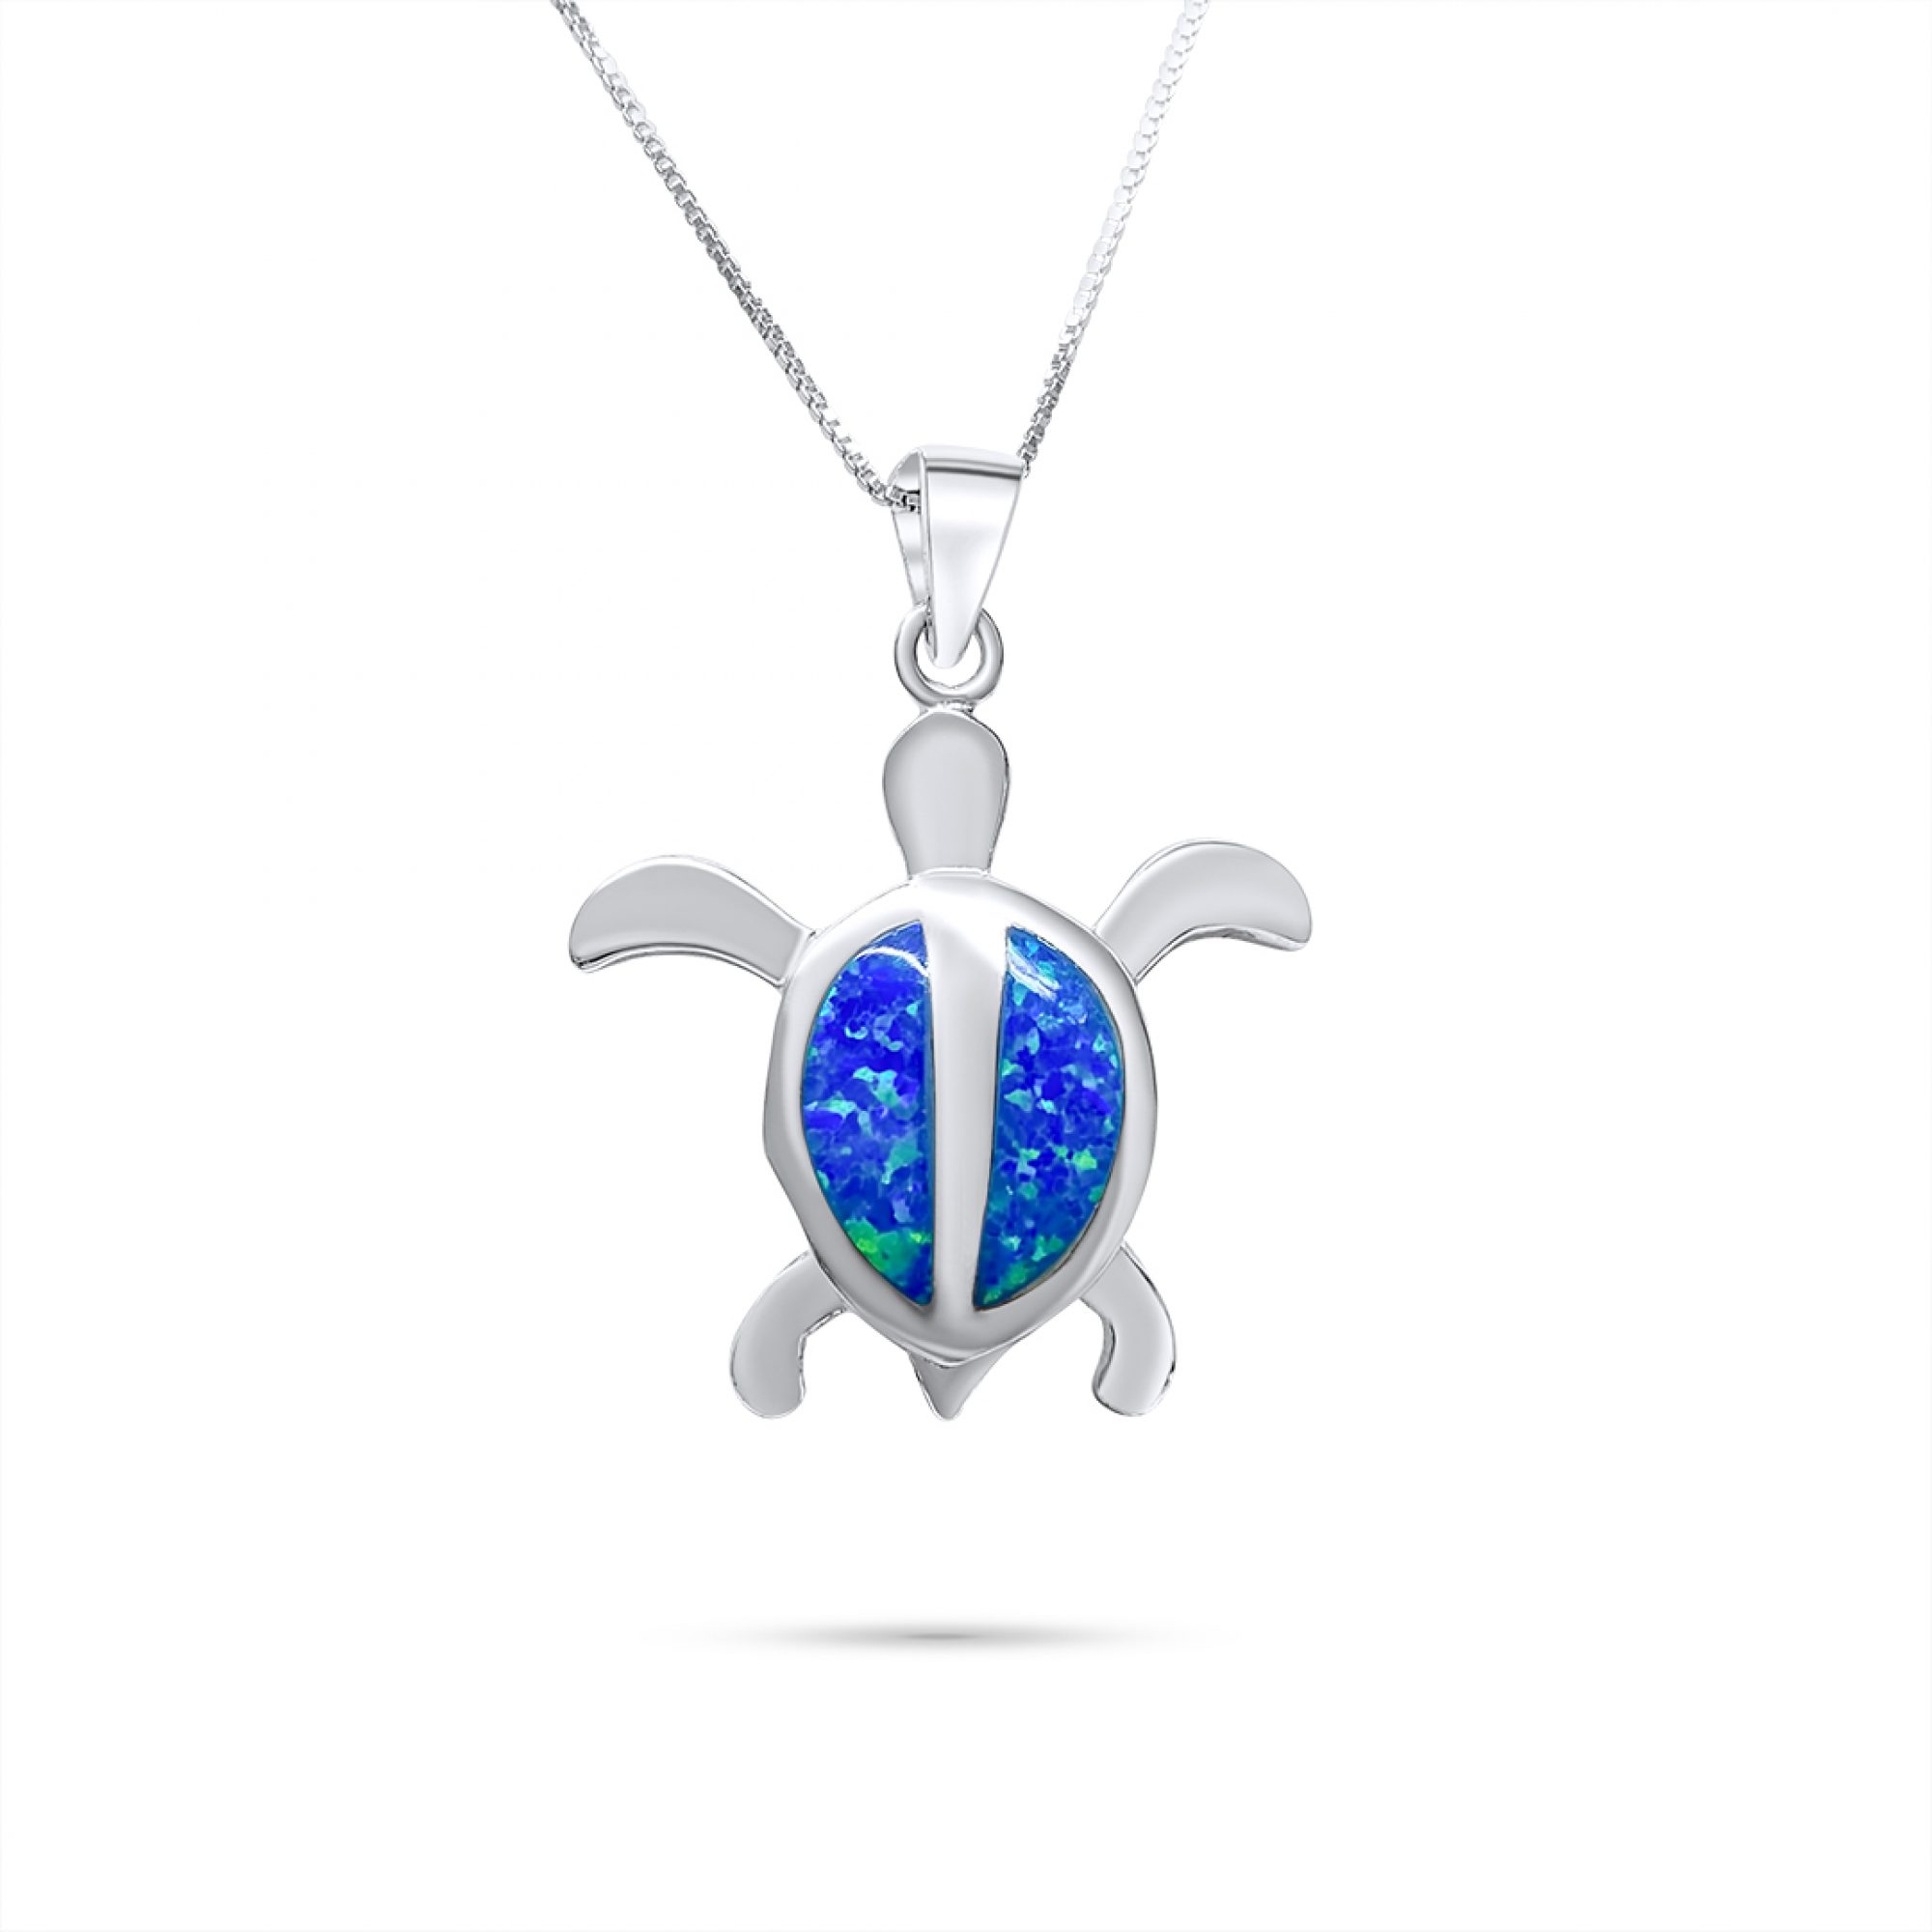 Opal turtle pendant